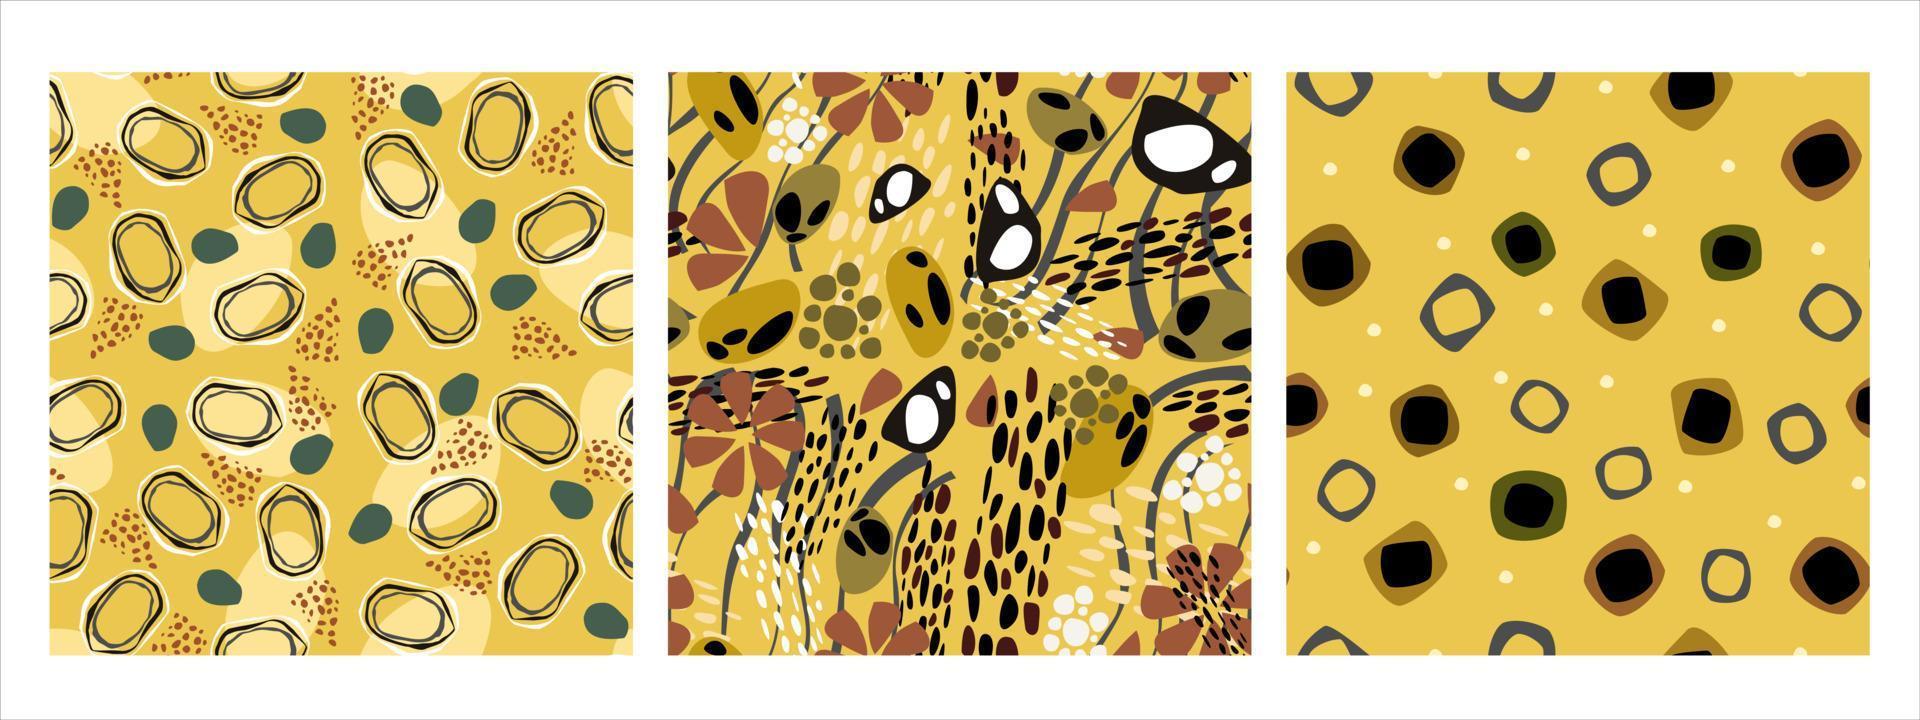 Seamless yellow patterns vector